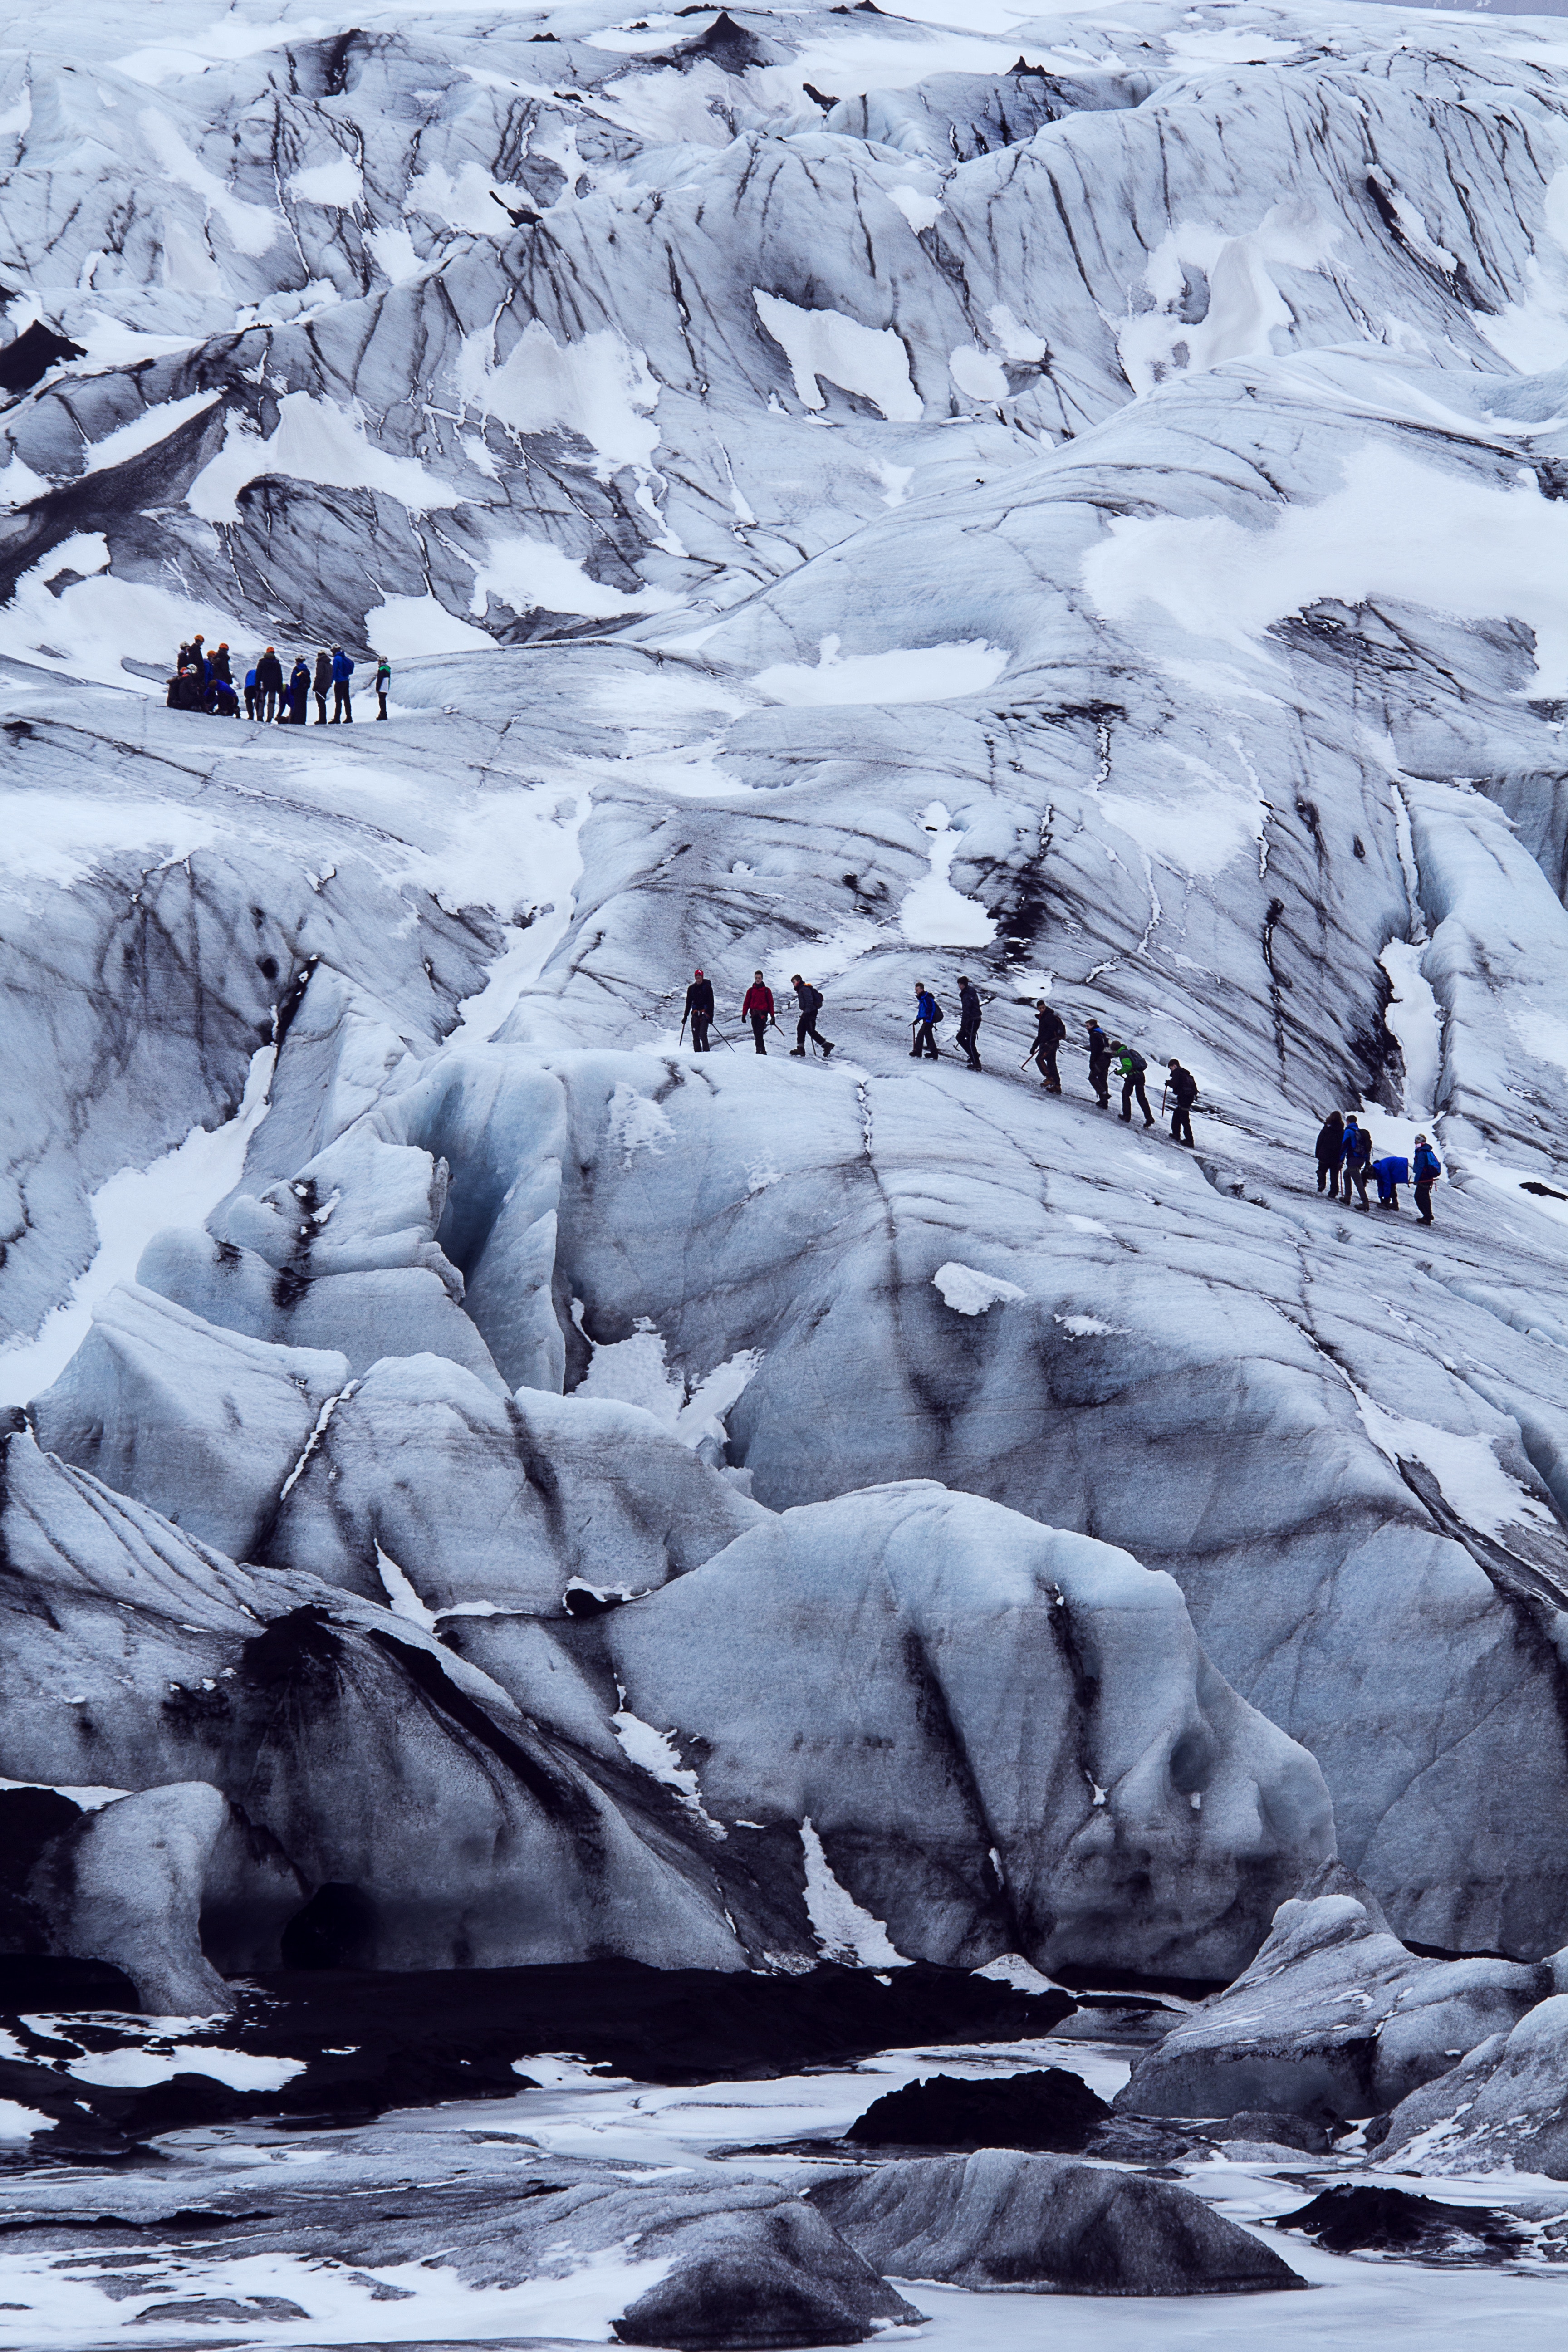 people on ice mountainn near body of water